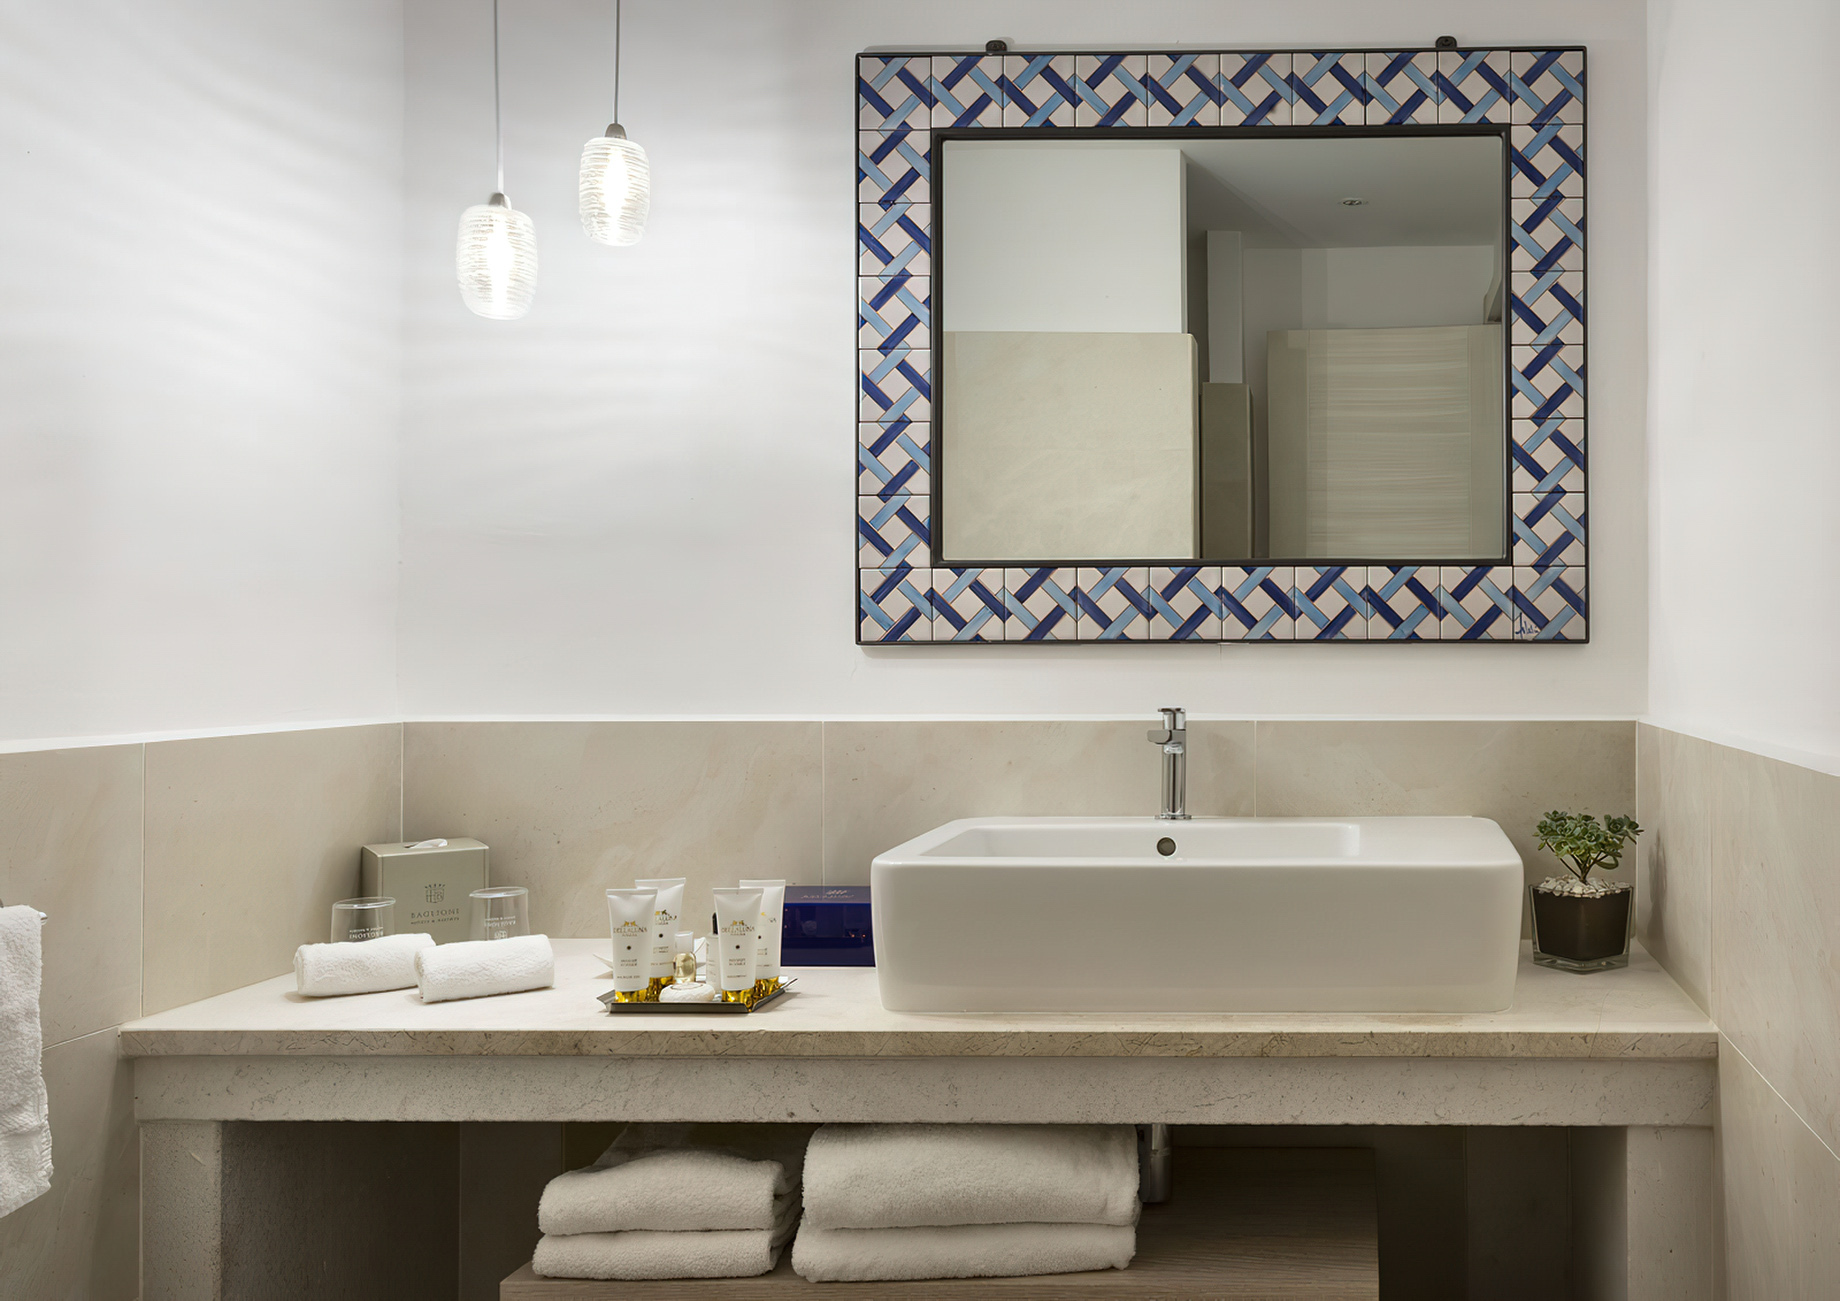 Baglioni Resort Sardinia – San Teodoro, Sardegna, Italy – Superior Room Bathroom